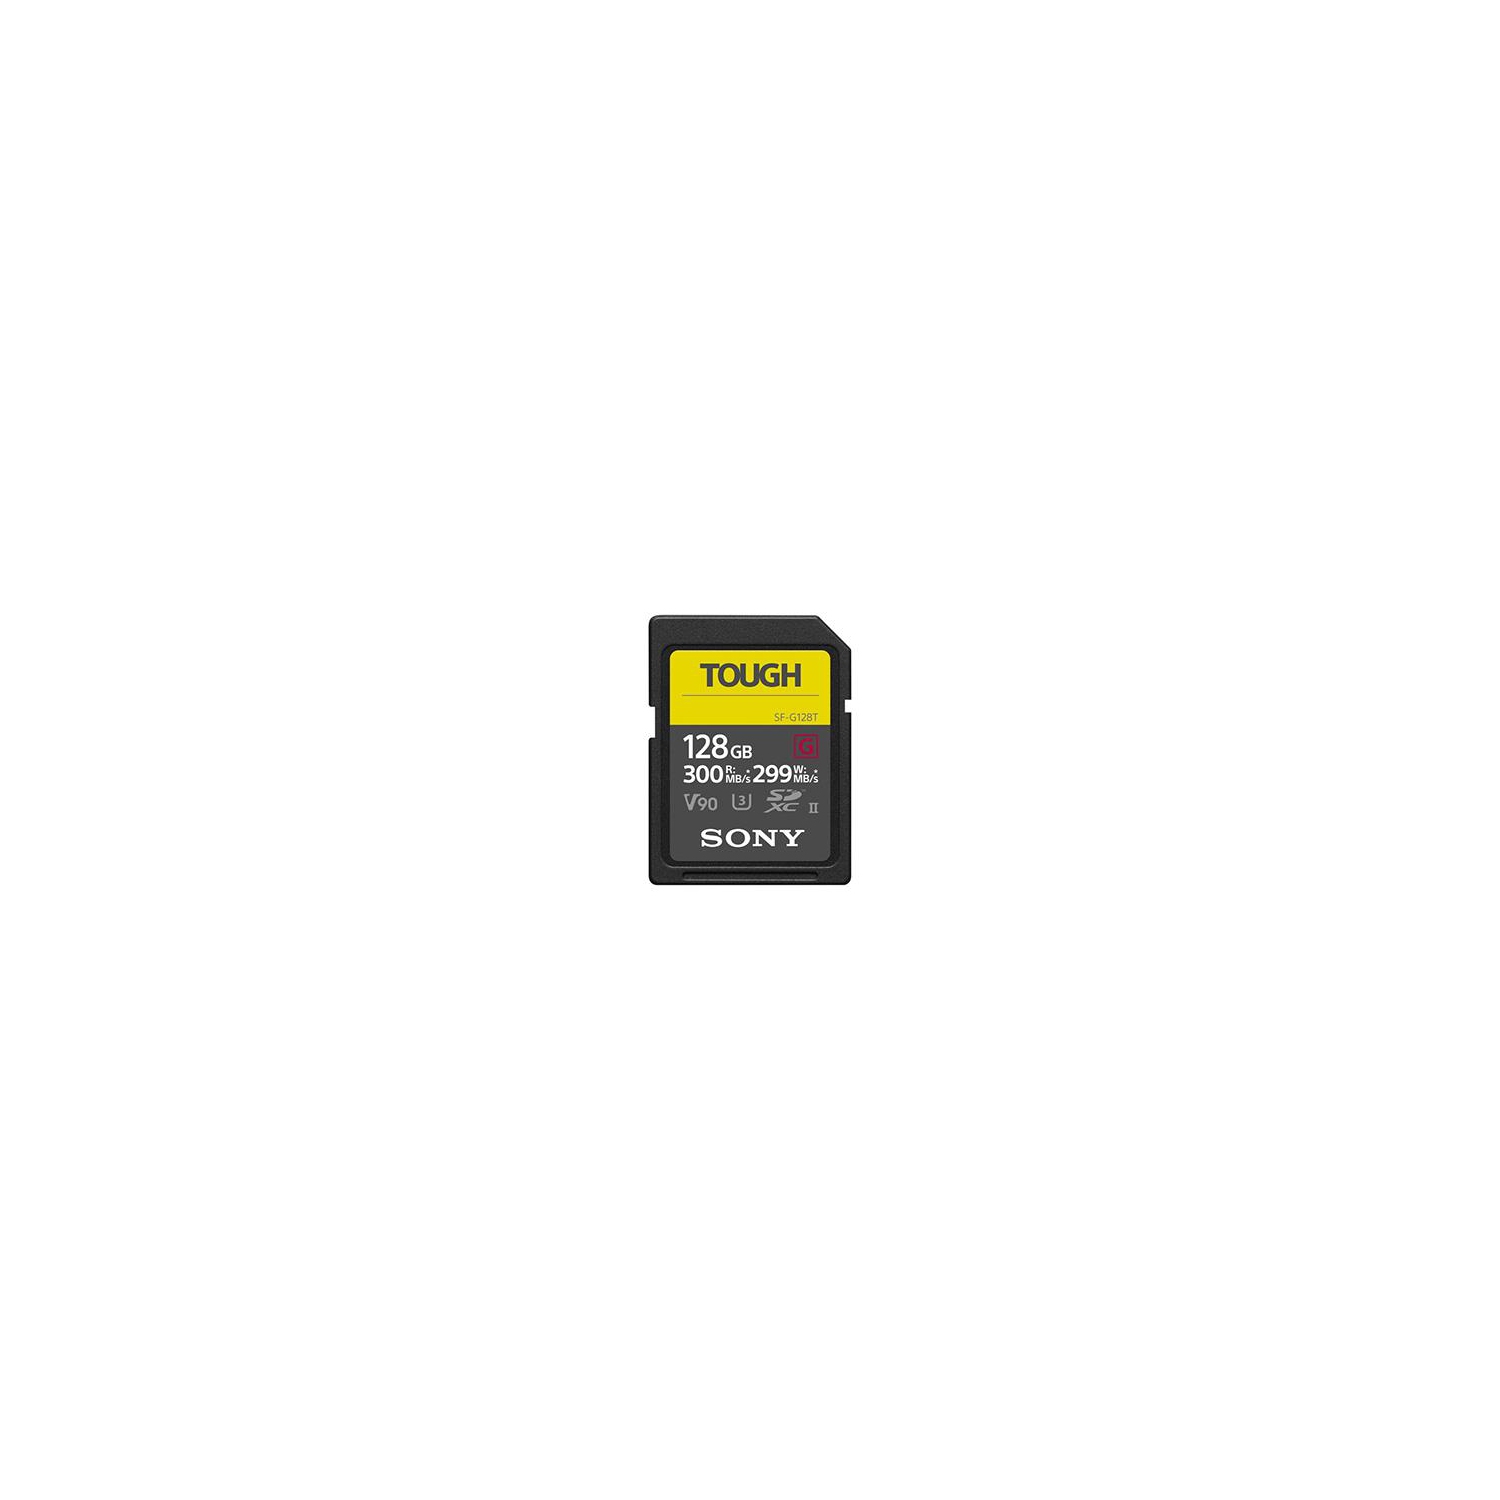 Sony 128GB SF-G Tough Series SD Card | Best Buy Canada